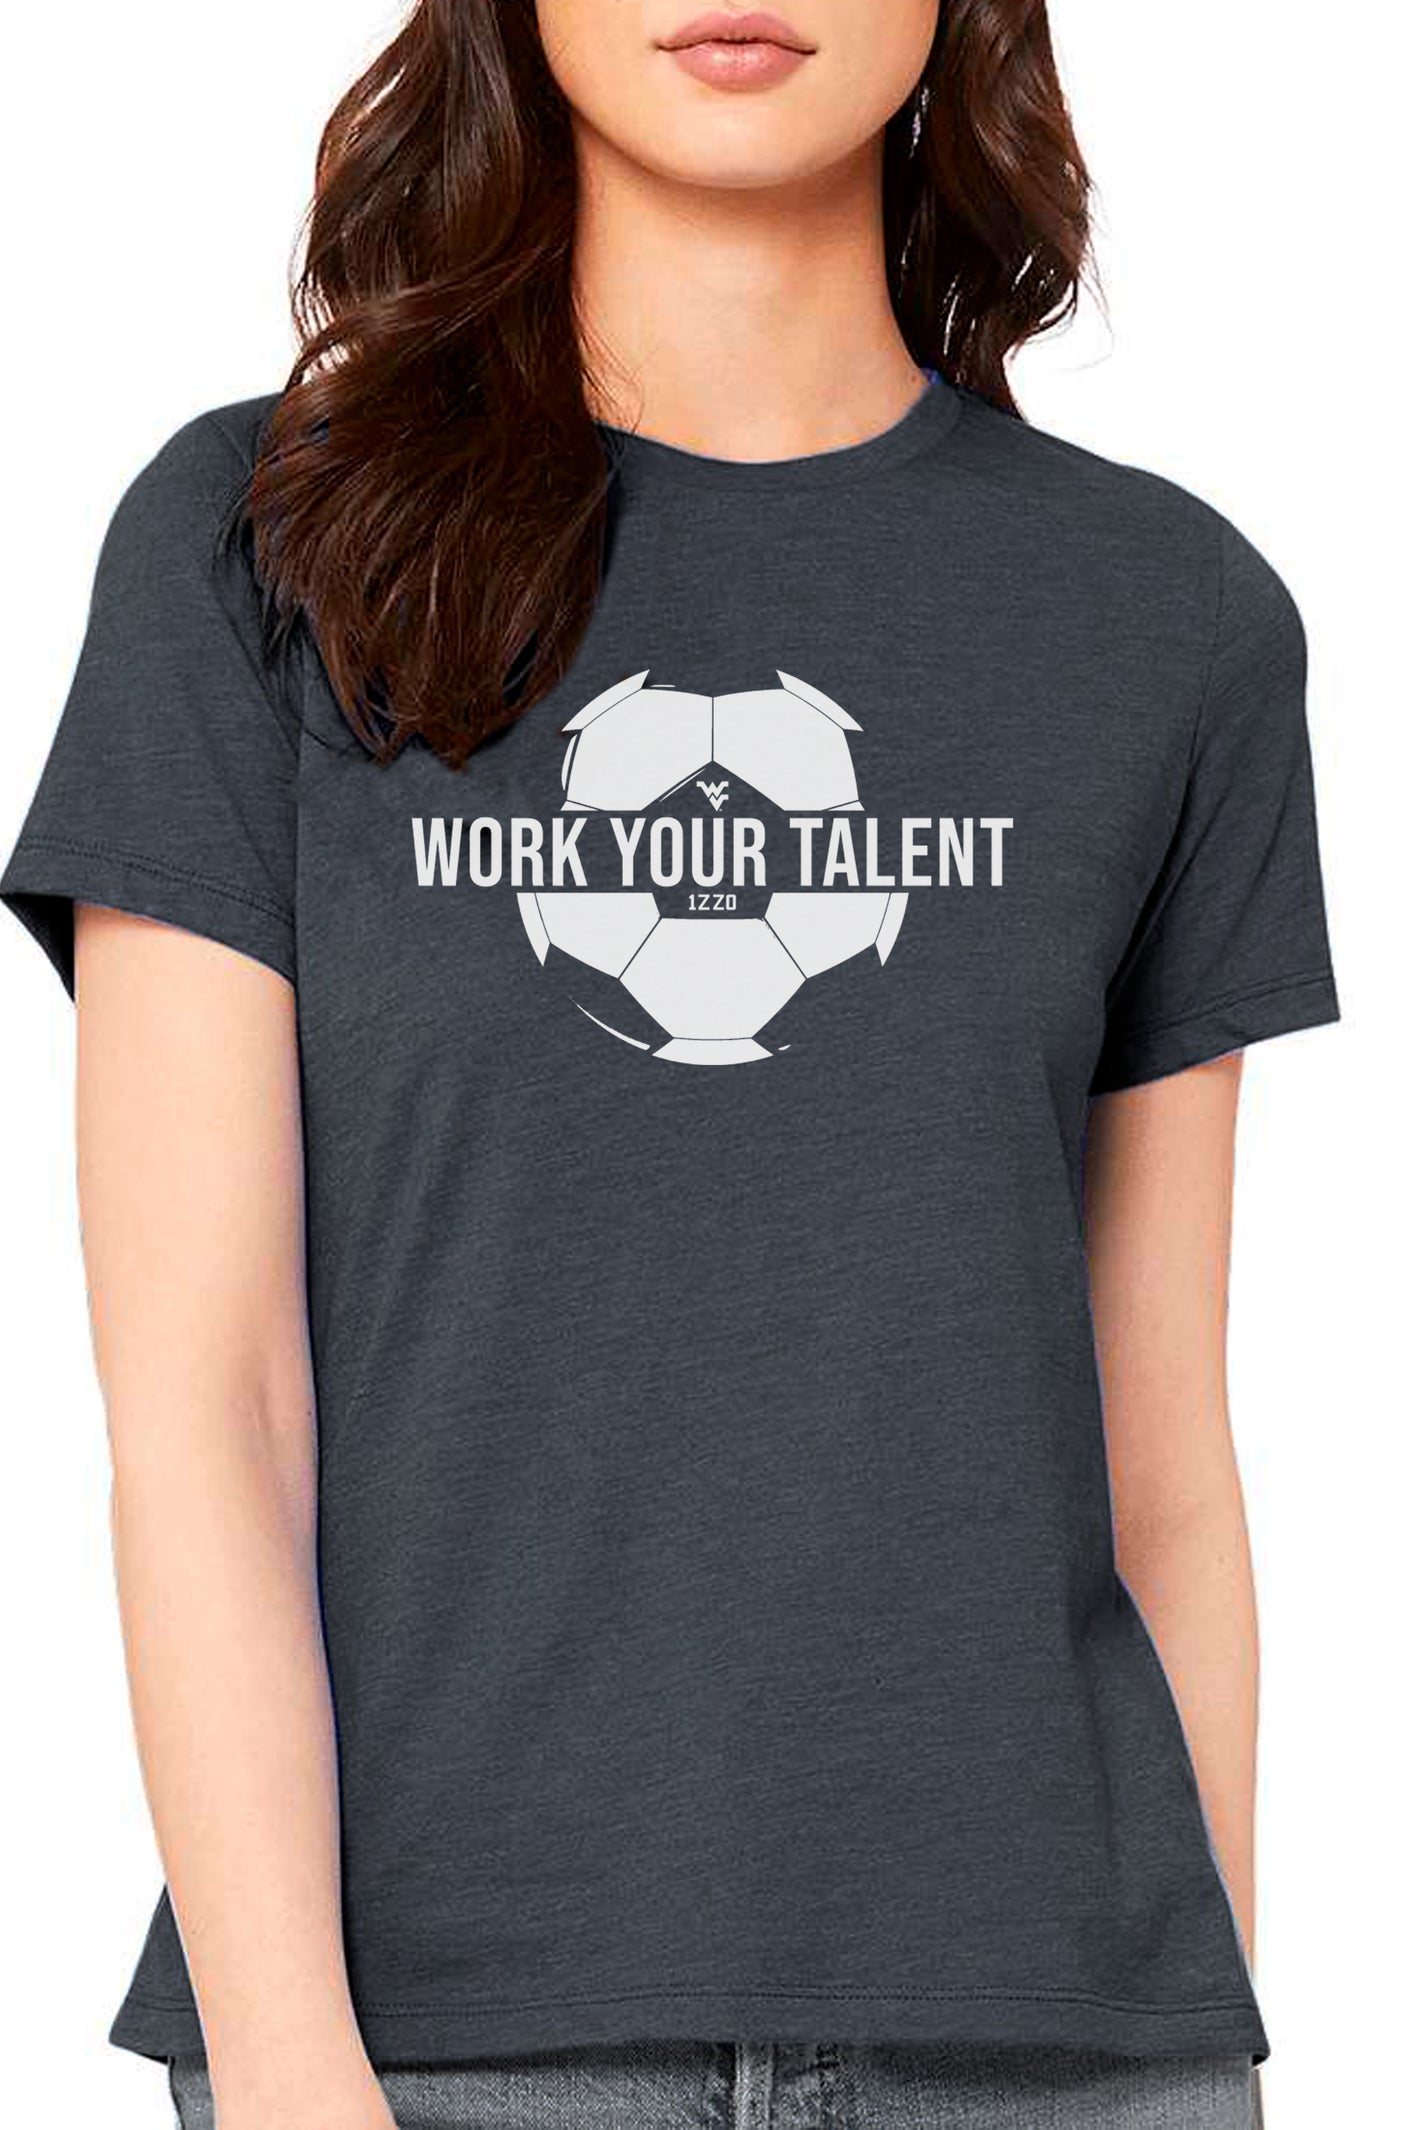 951 - 1ZZ0 - Work Your Talent Unisex Adult T-Shirt - Heather Graphite